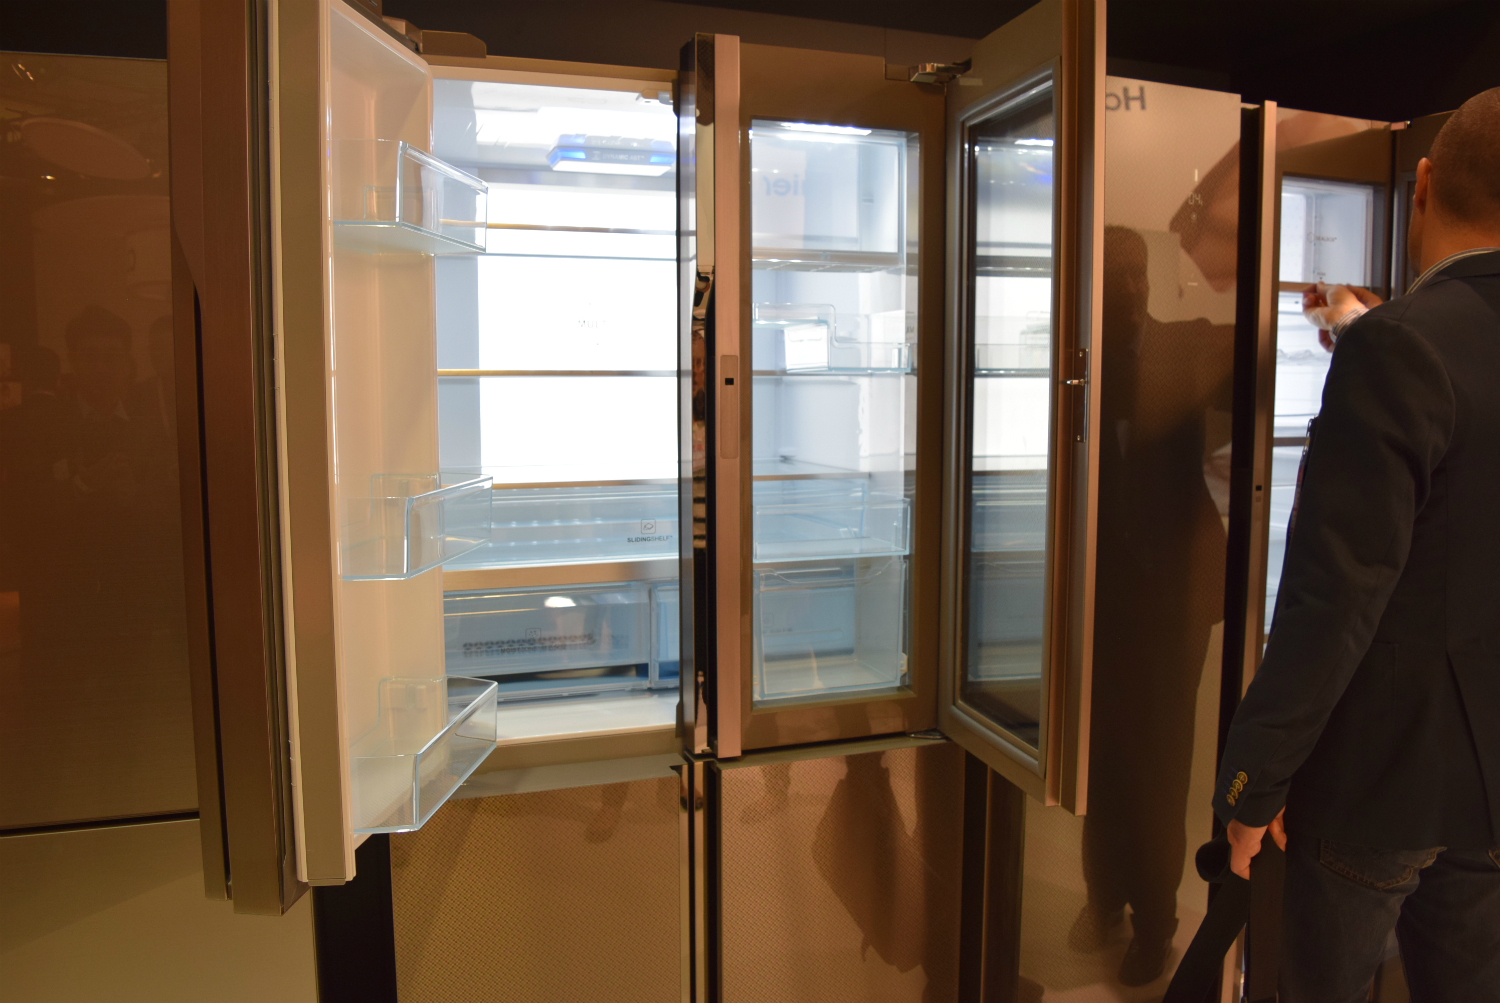 bekos homecream fridge has a built in ice cream maker haier smart window 2